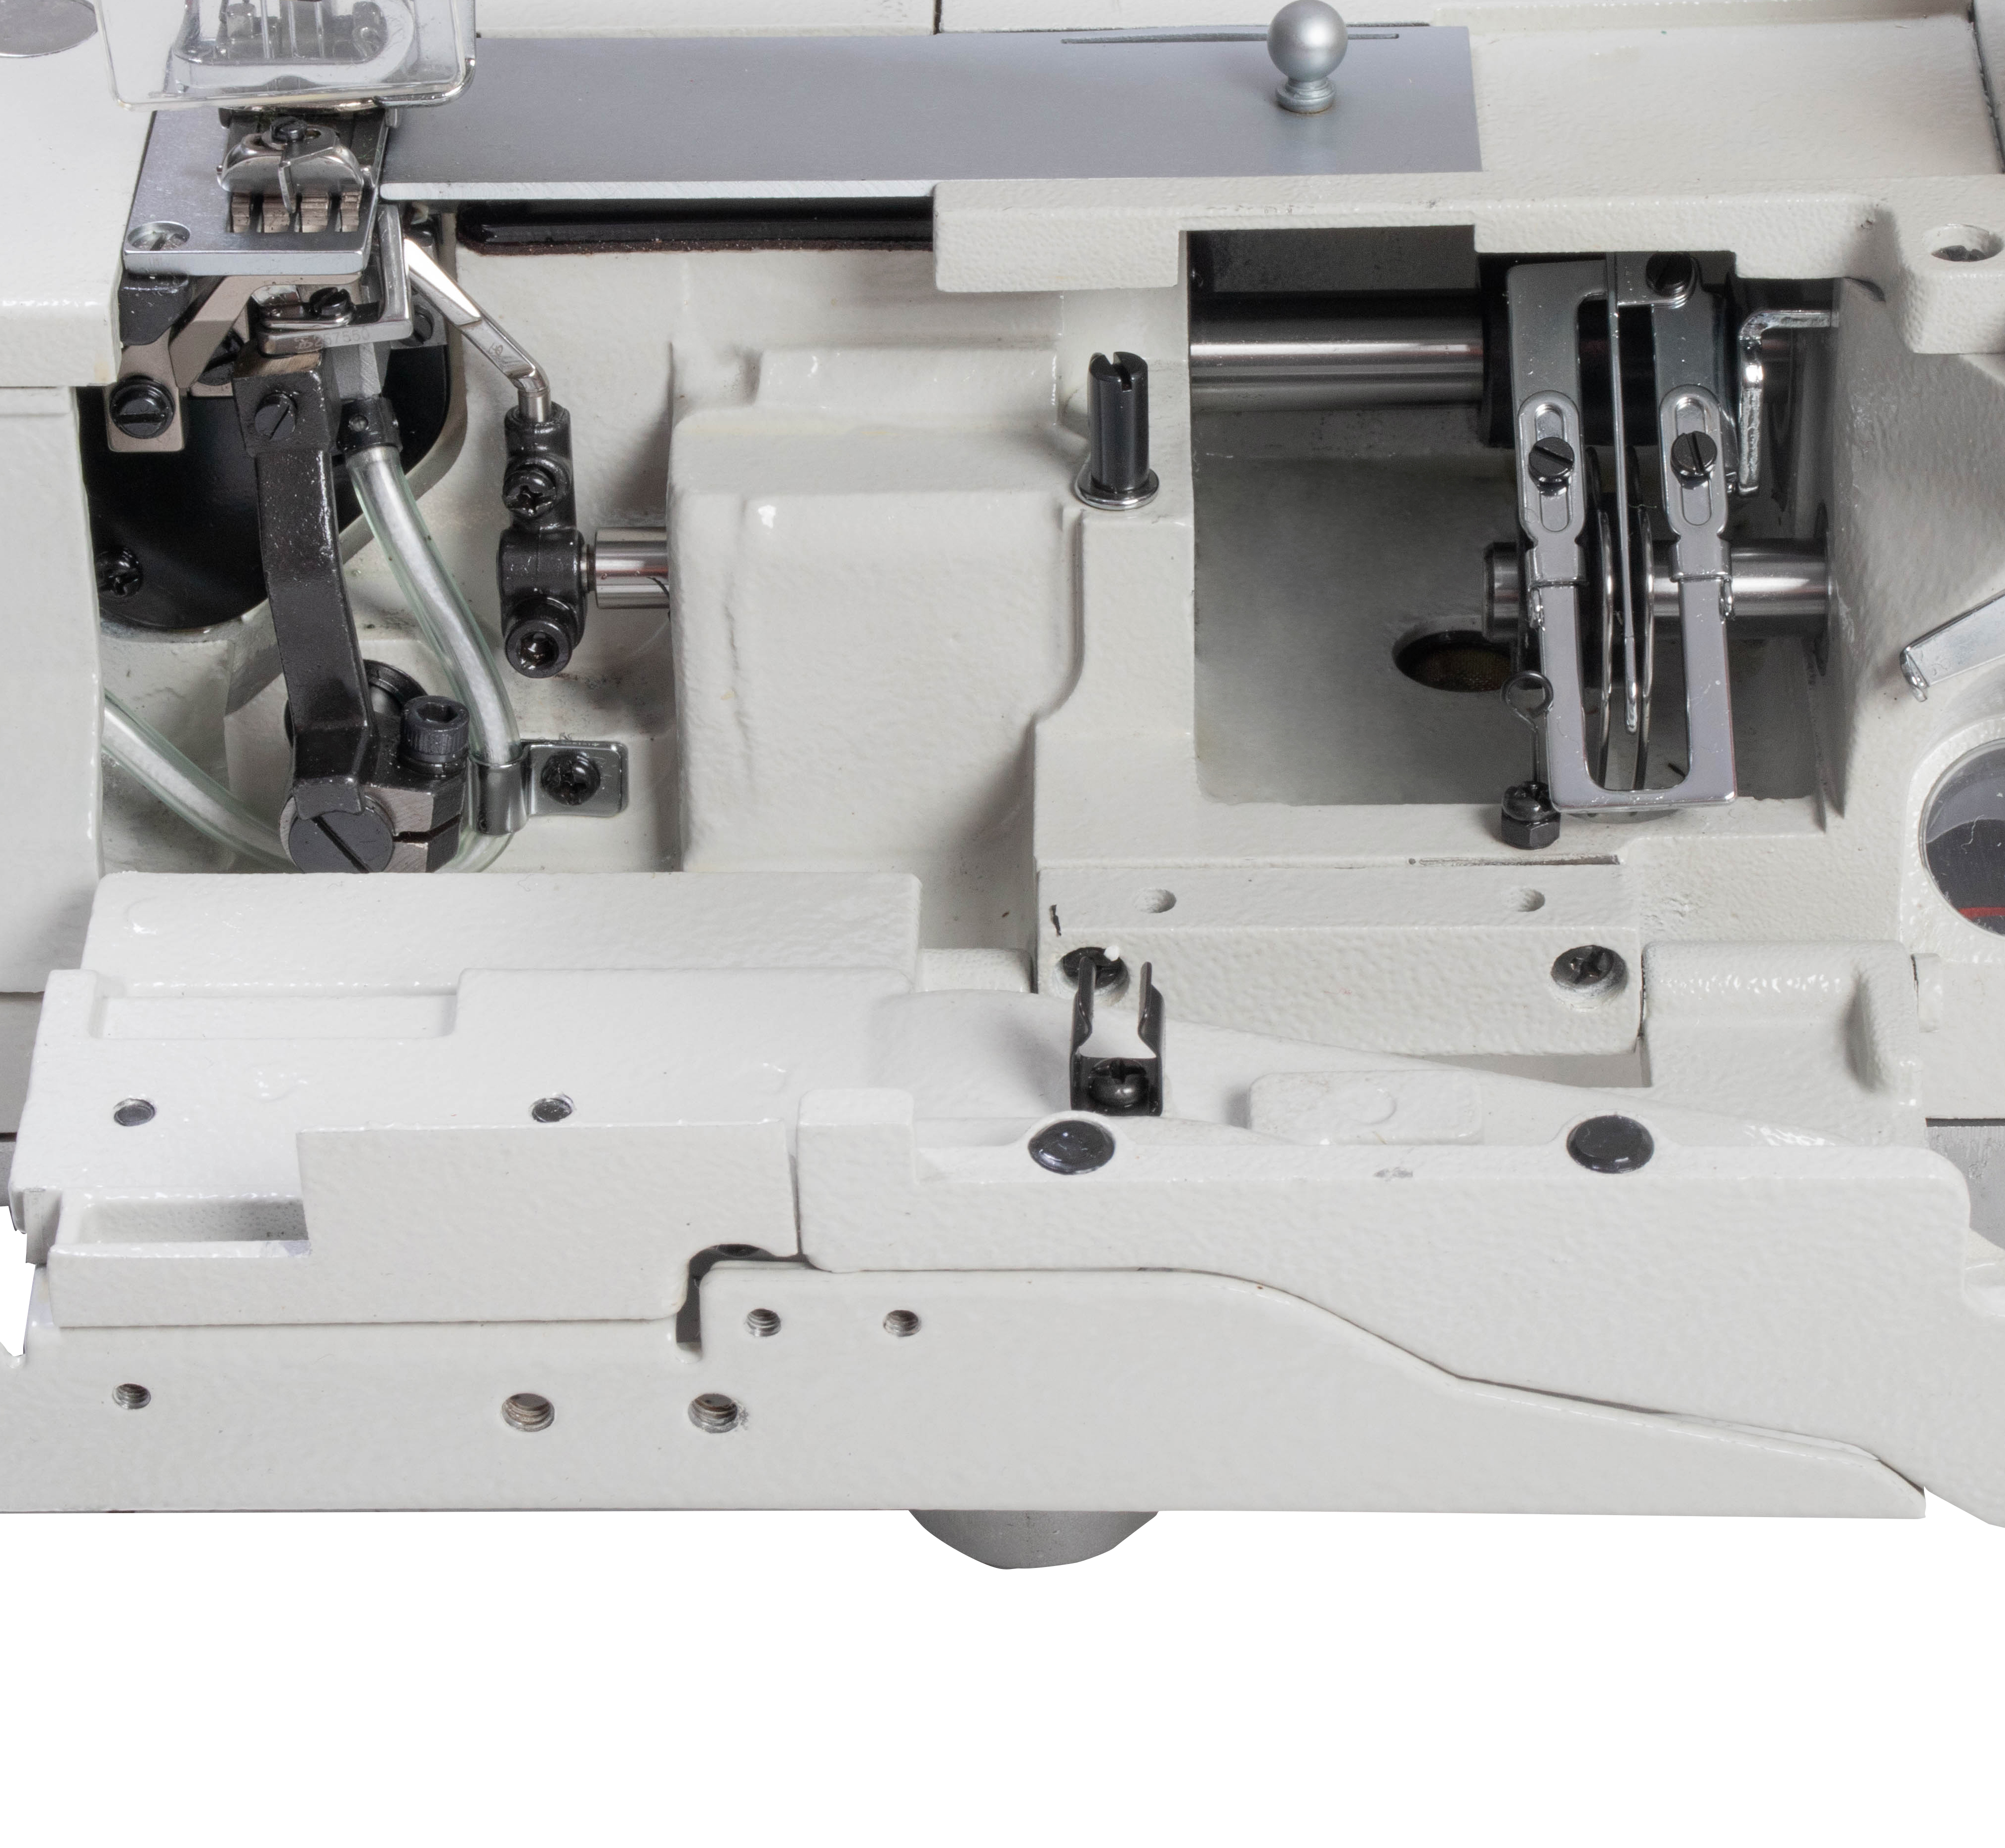 Máquina Costura Industrial Galoneira Plana Fechada LU500D-01-TZ-QI - Lumak